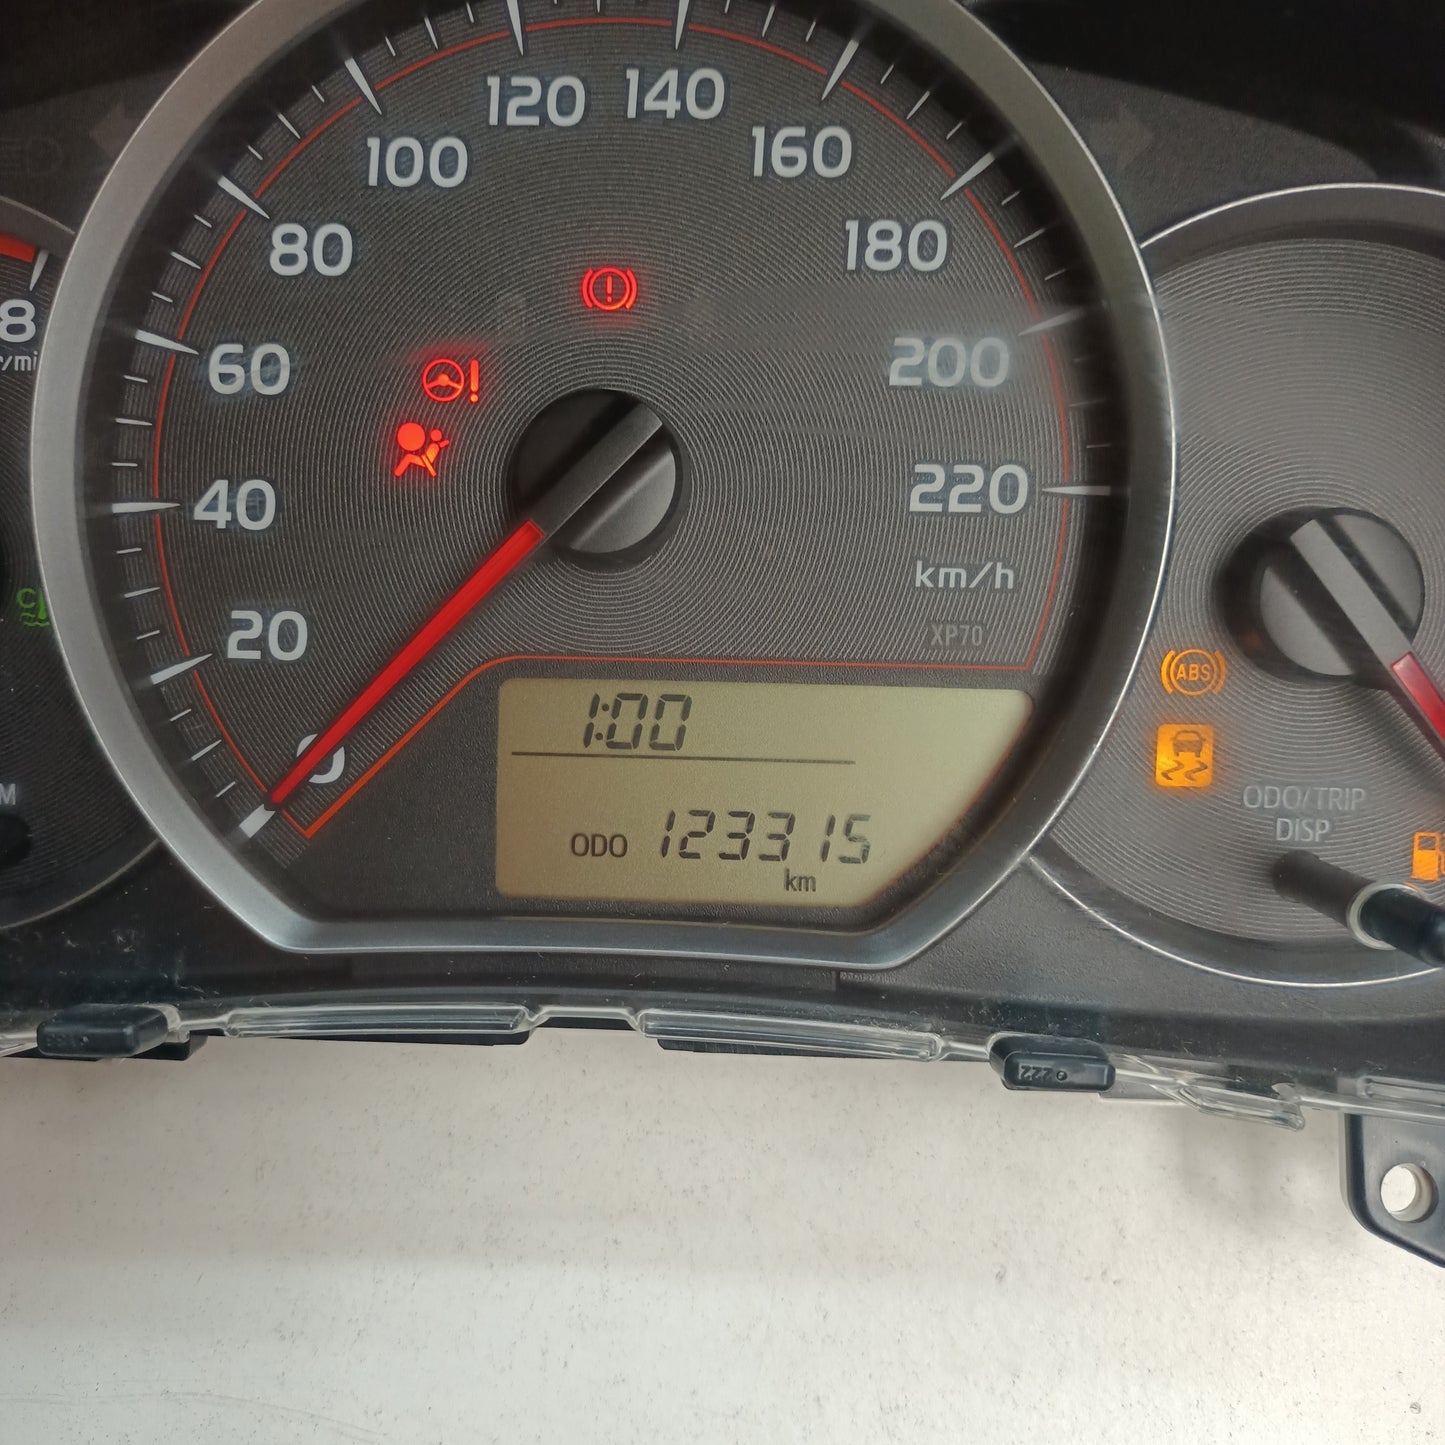 Toyota Yaris Hatchback Instrument Cluster NCP13# 2011 2012 2013 2014 123315km